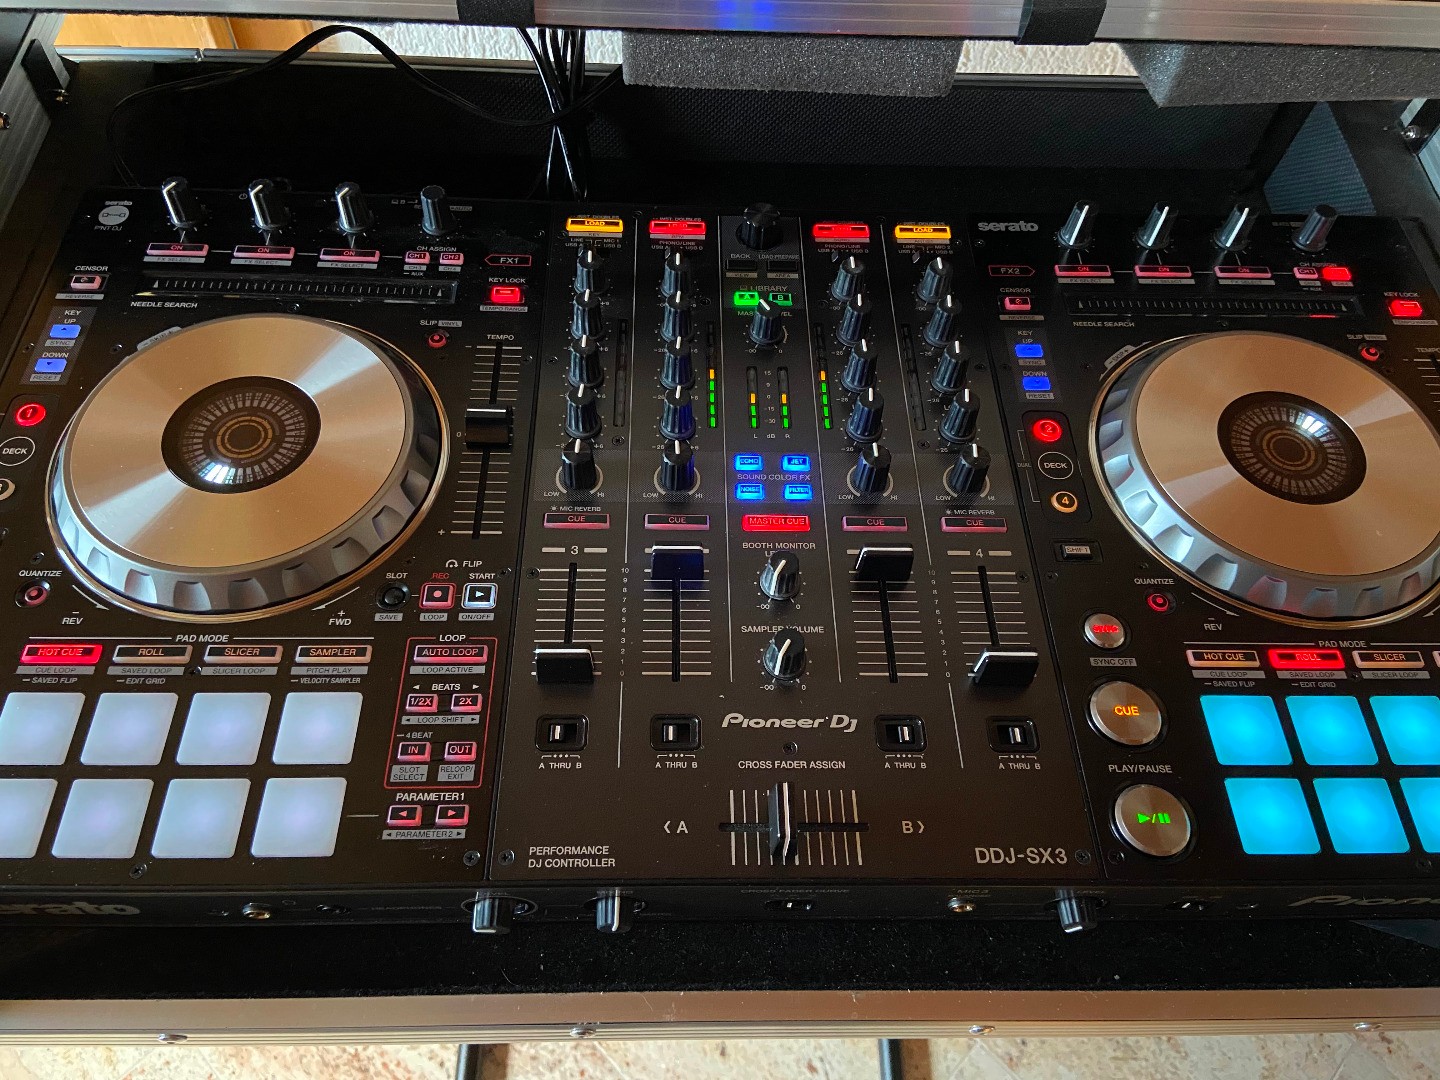 instrumentos musicales - Mixer Smart Controladora DJ Platos Consola Pioneer PromaxcultraS23macsamsiphnote 5